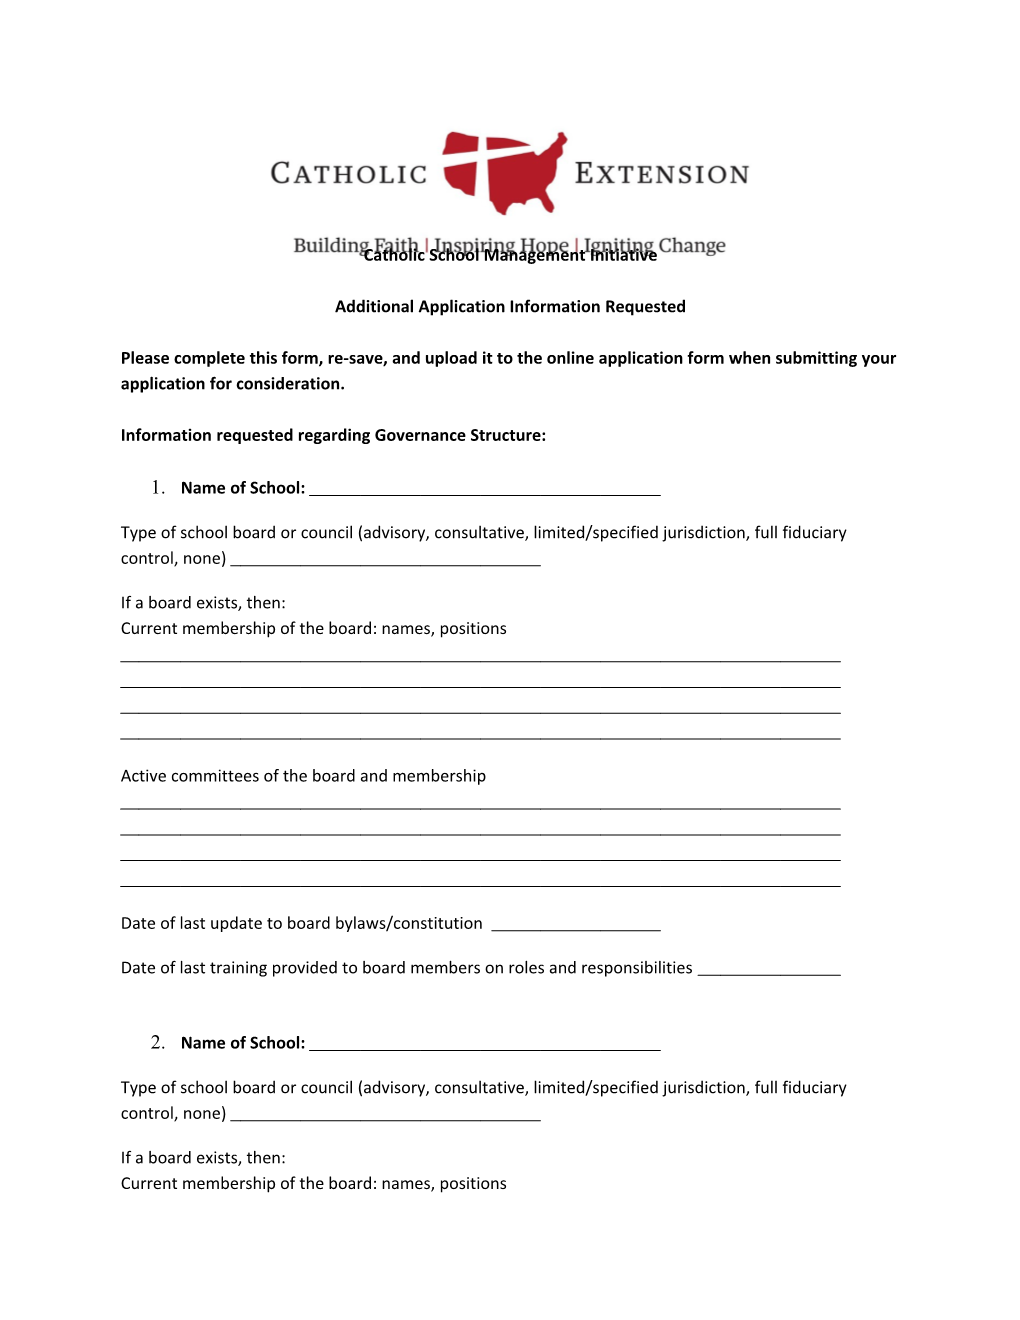 Catholic School Management Initiative